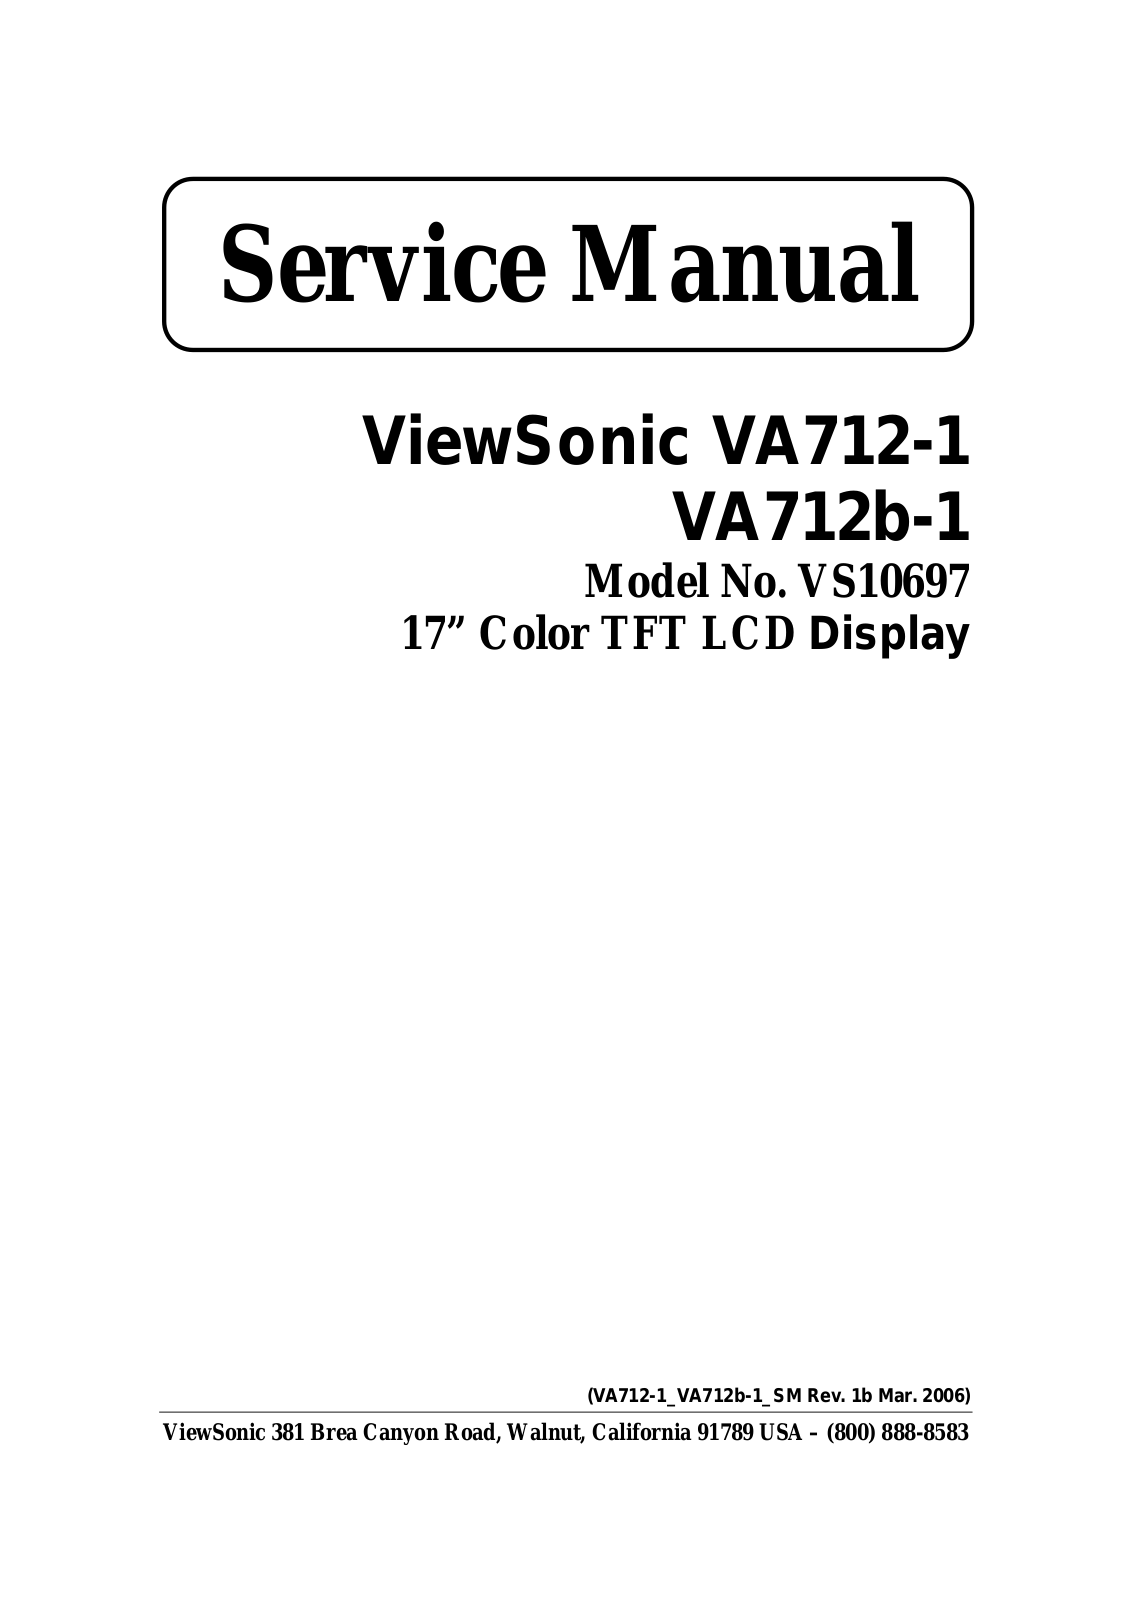 Viewsonic VA712-1W, VA712-1 Service Manual